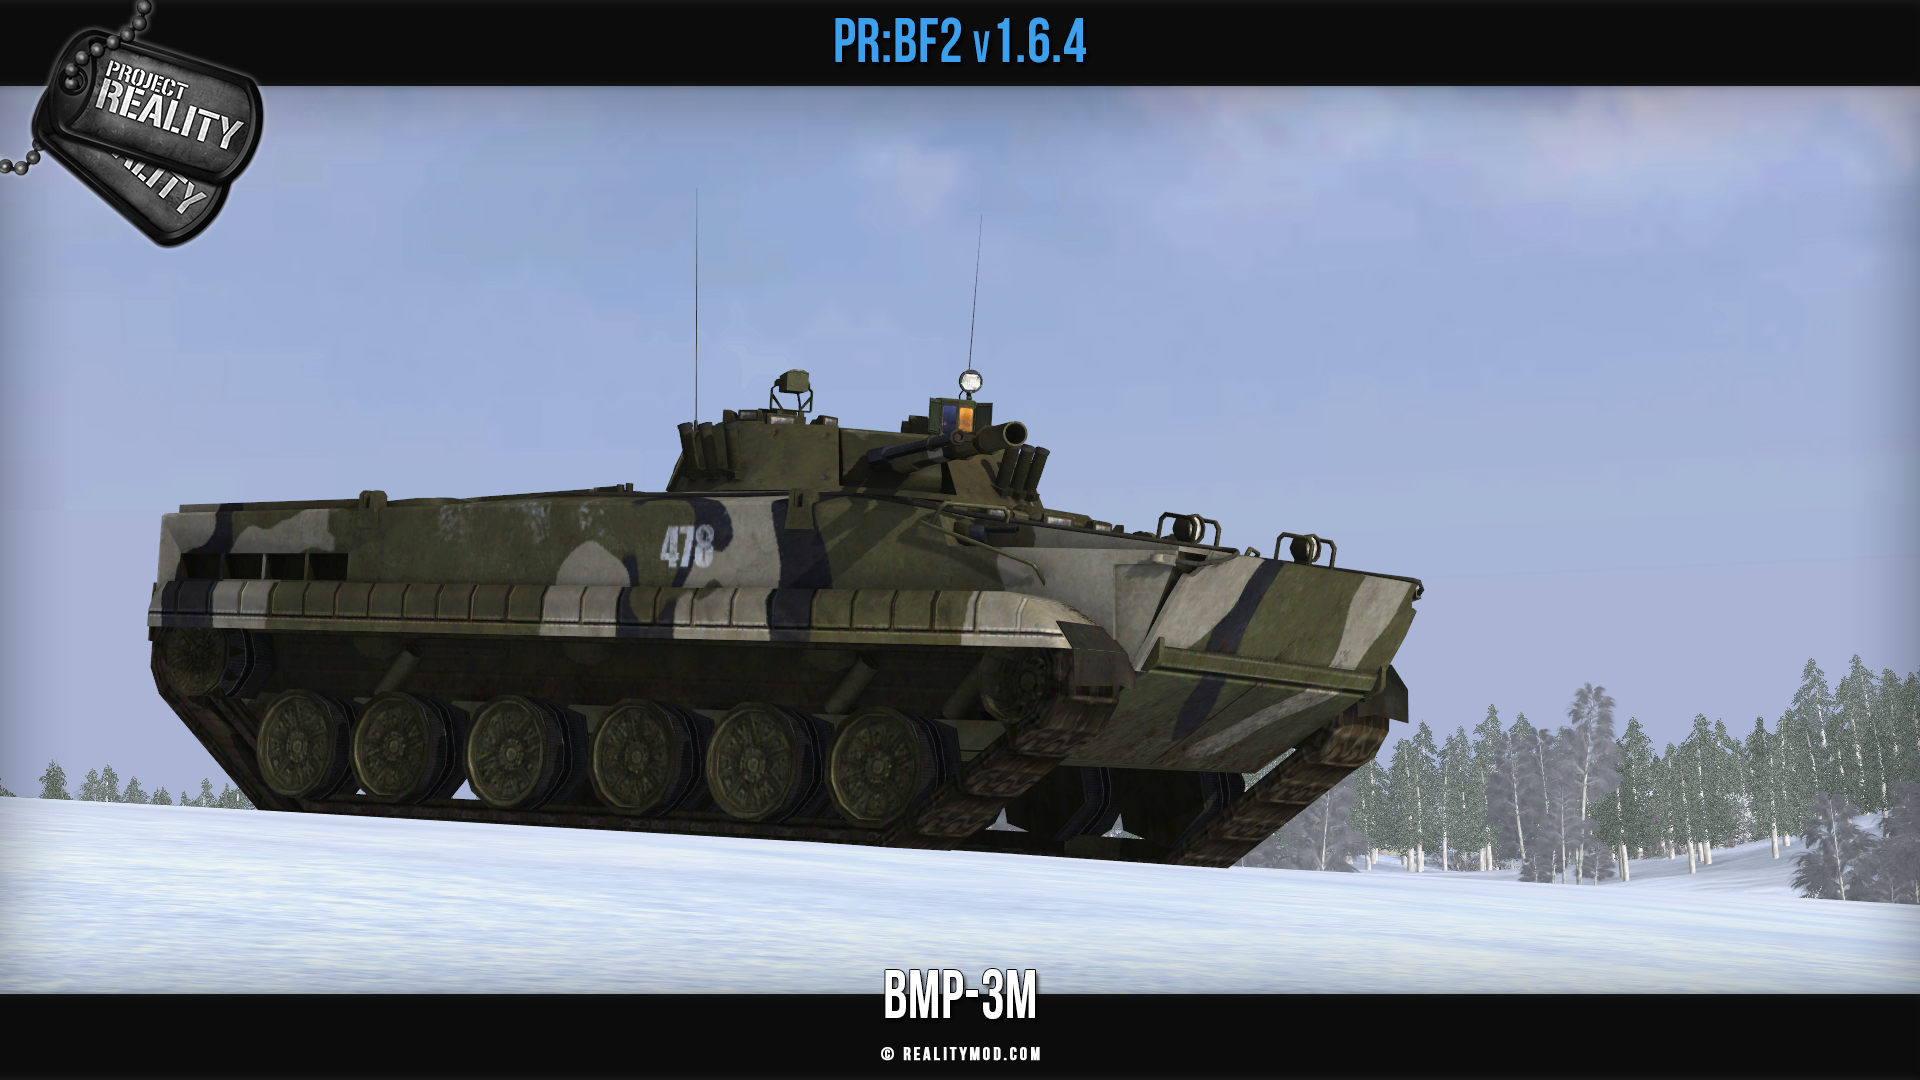 Battlefield 2 Project reality Чечня. Project reality bf2 1.7. Проджект реалити БФ 2. Project reality bf2 vehicle.